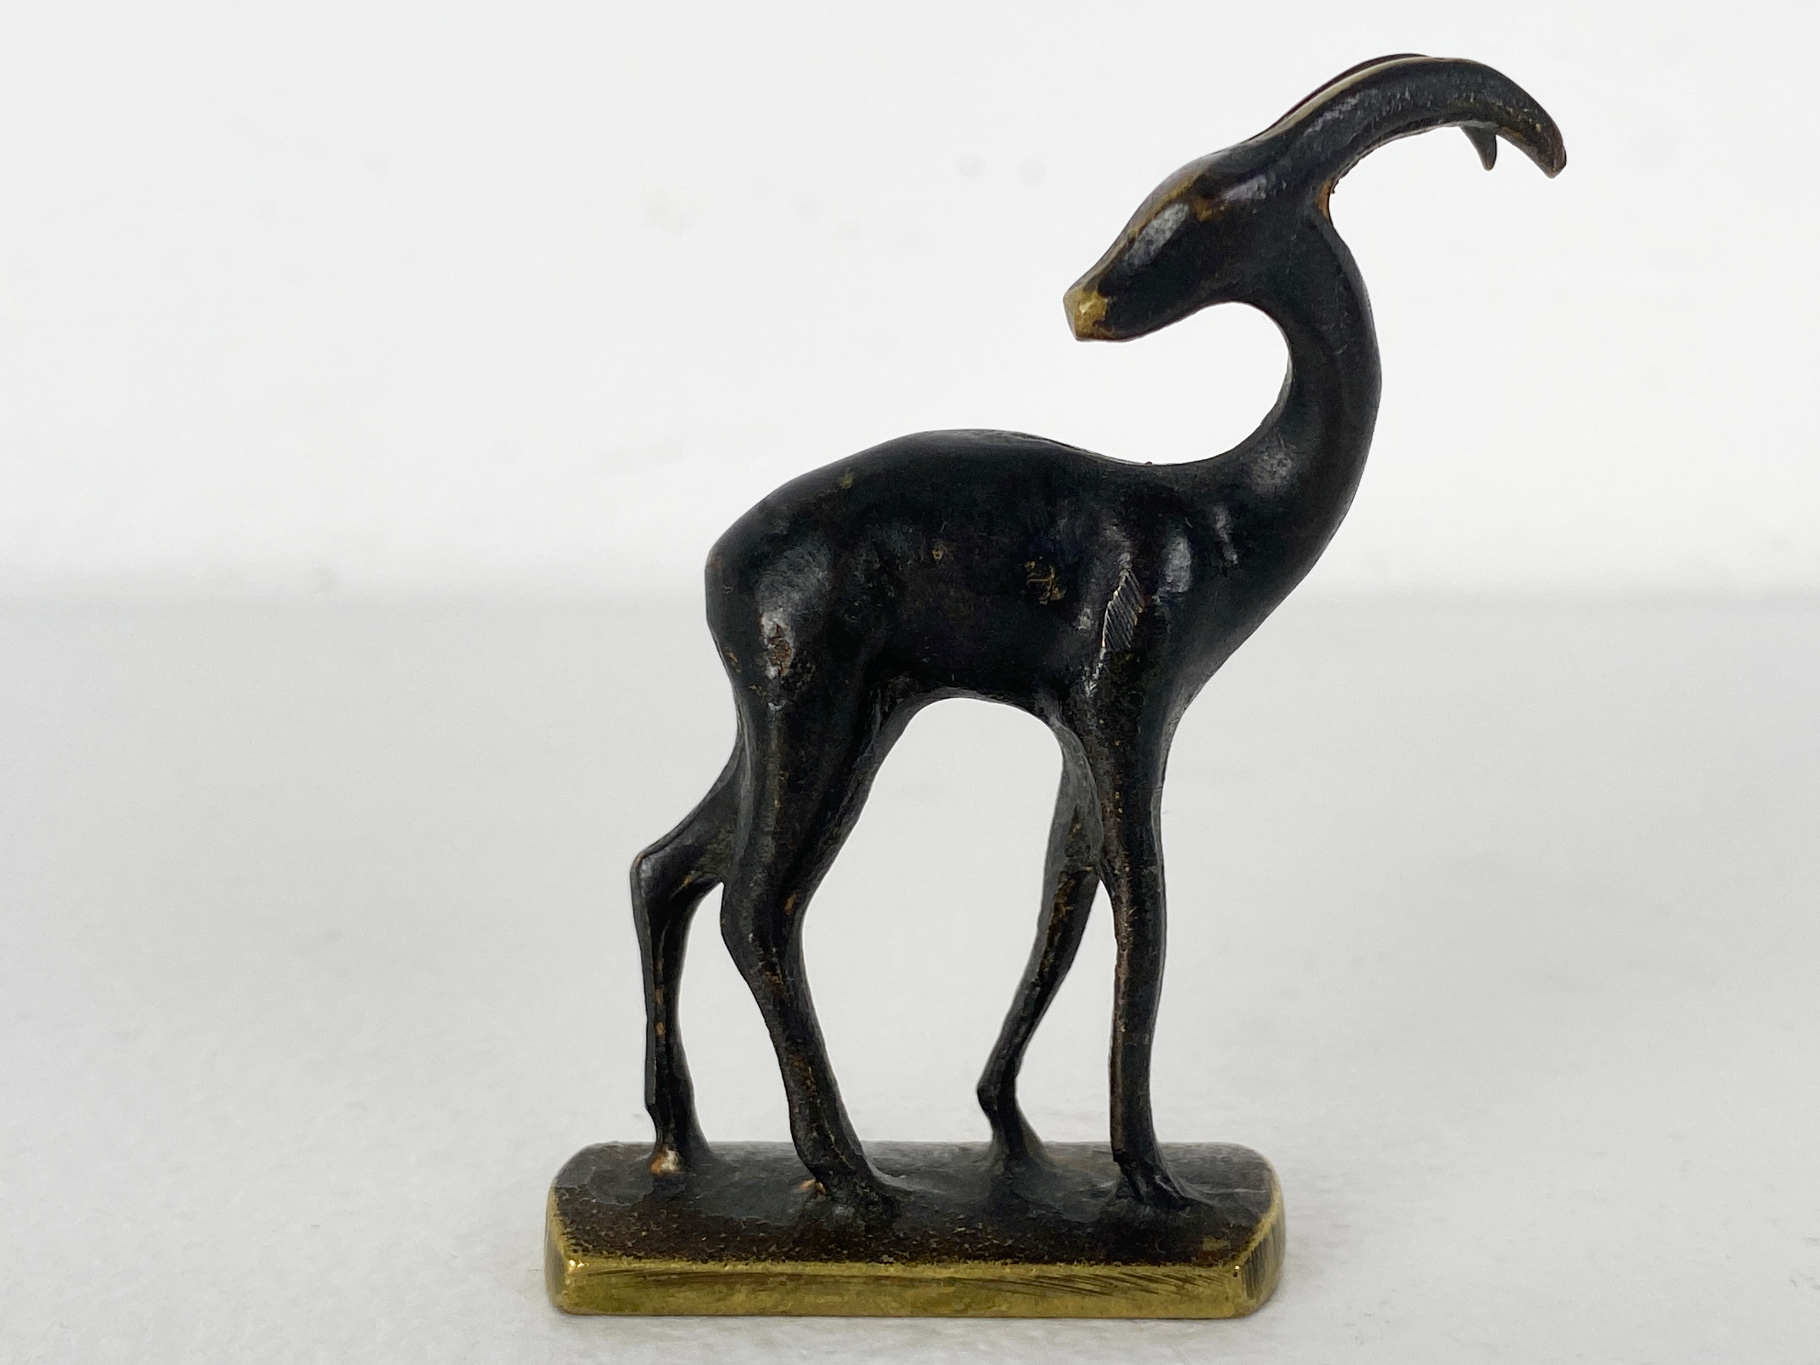 Antelope / Gazelle Bronze Figure by Hertha Baller, Austria, 1950s